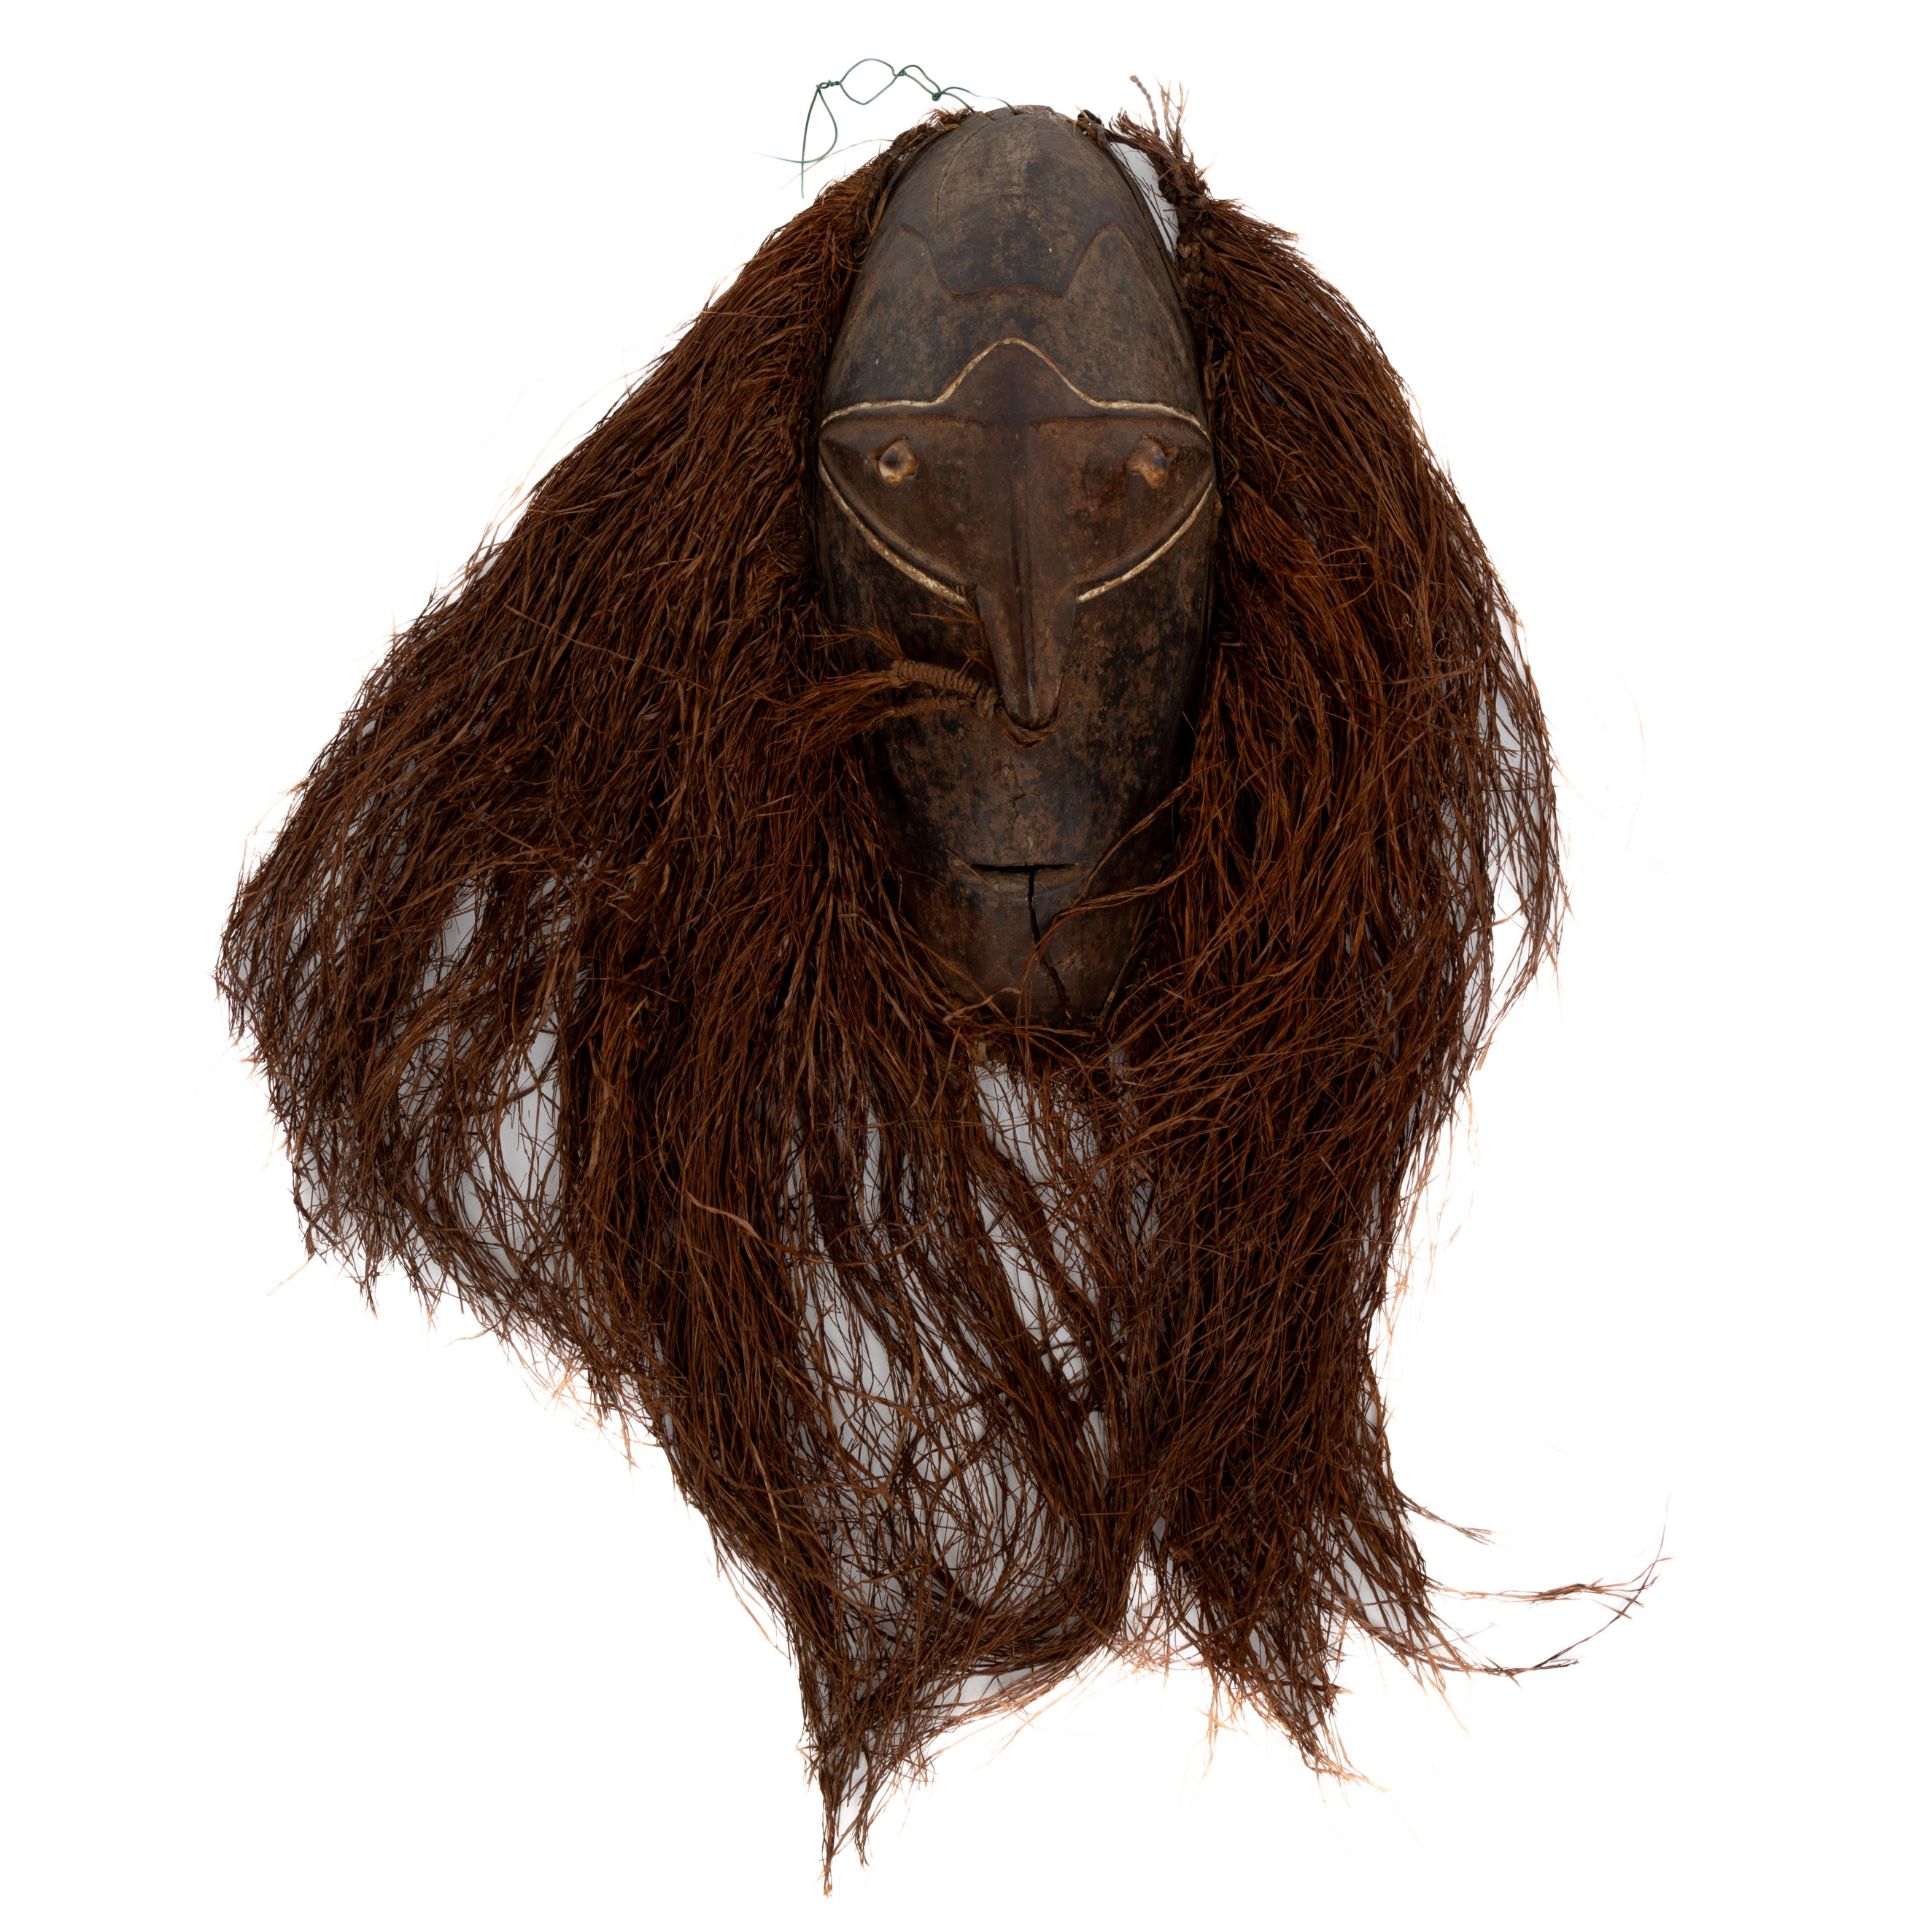 P.N. Guinea, Lower Sepik, mask